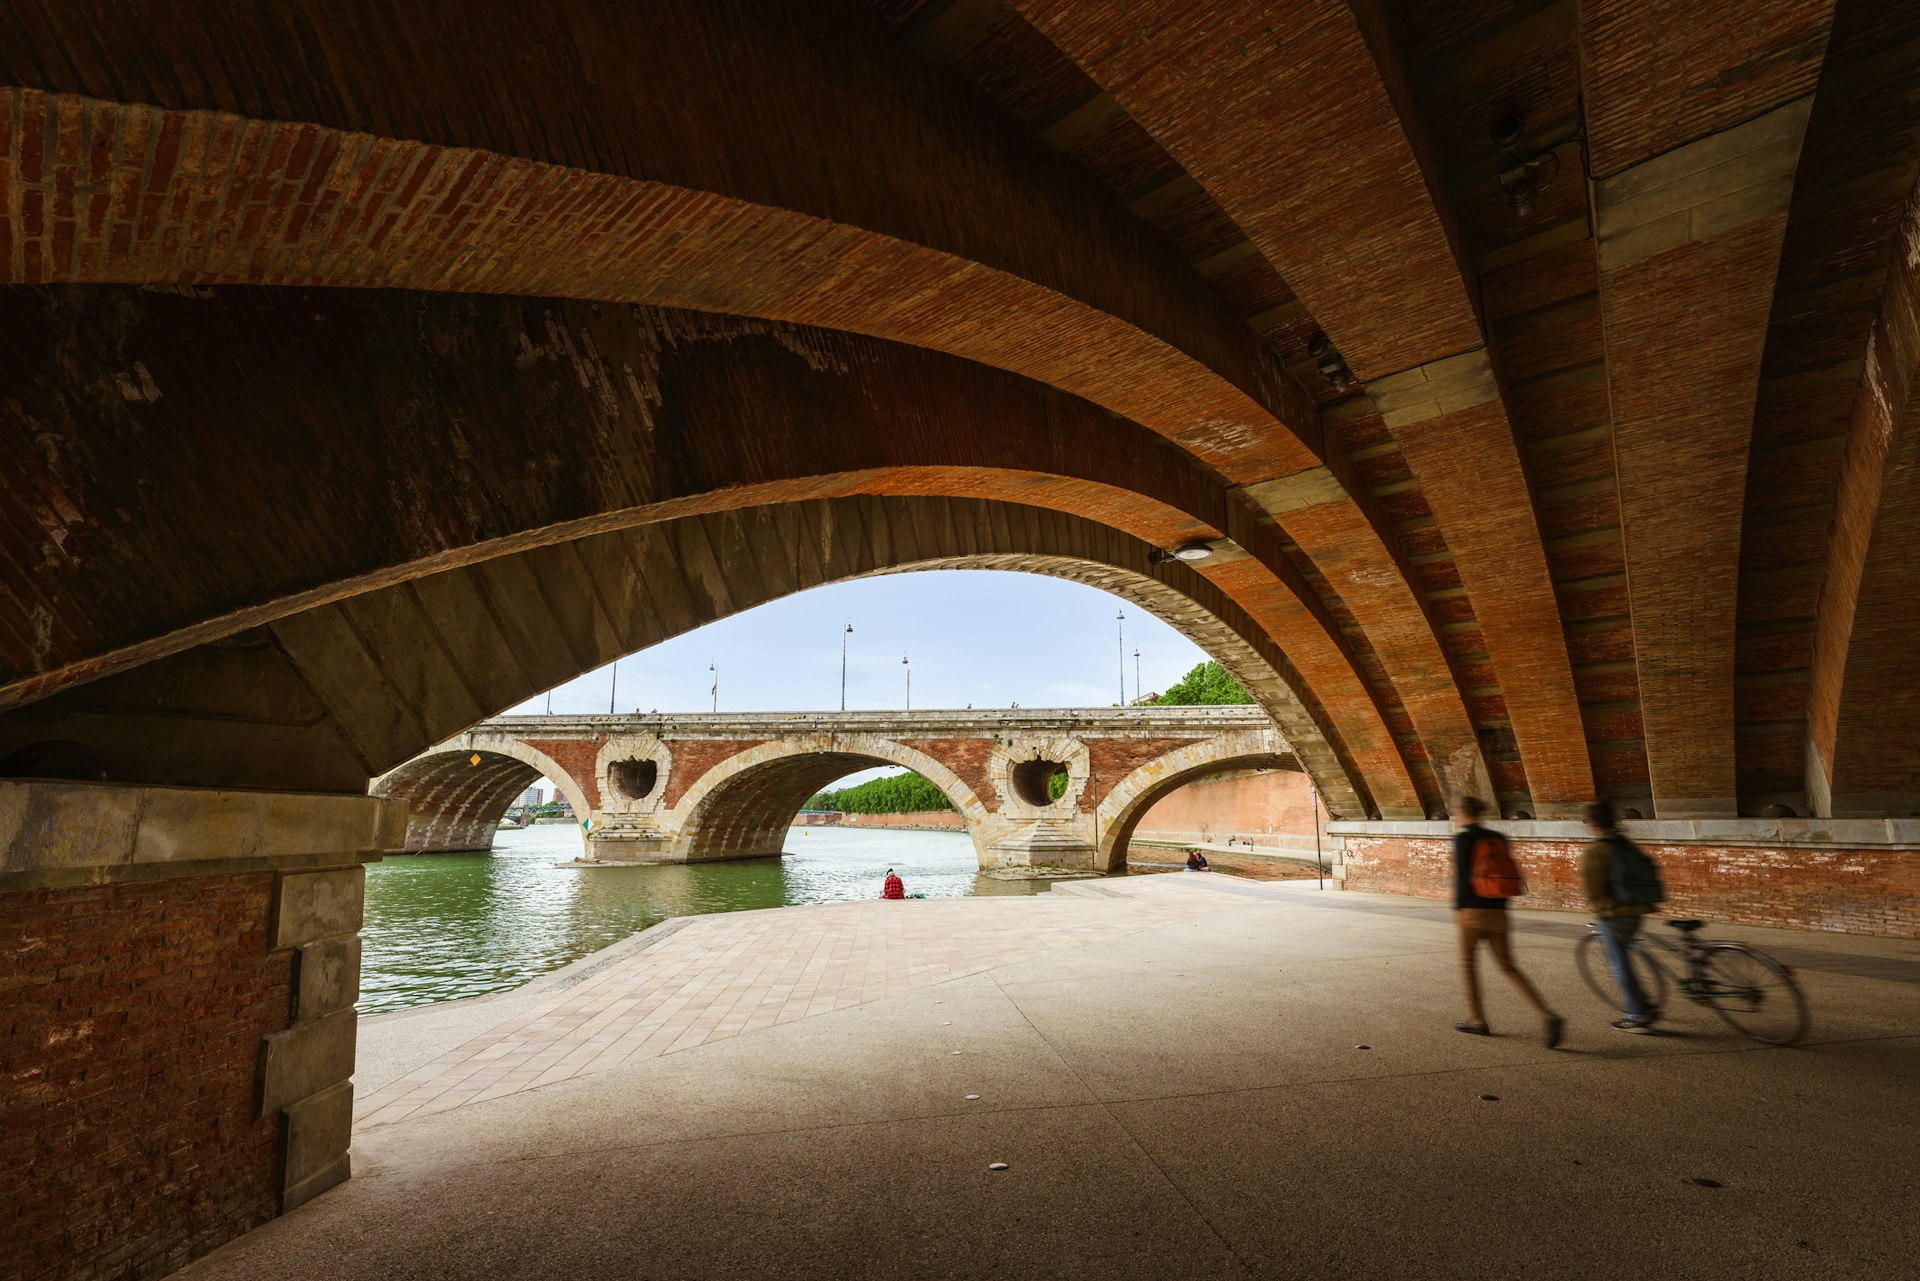 Two people wheel a bike through a pedestrianized walkway under a bridge to a path alongside a river